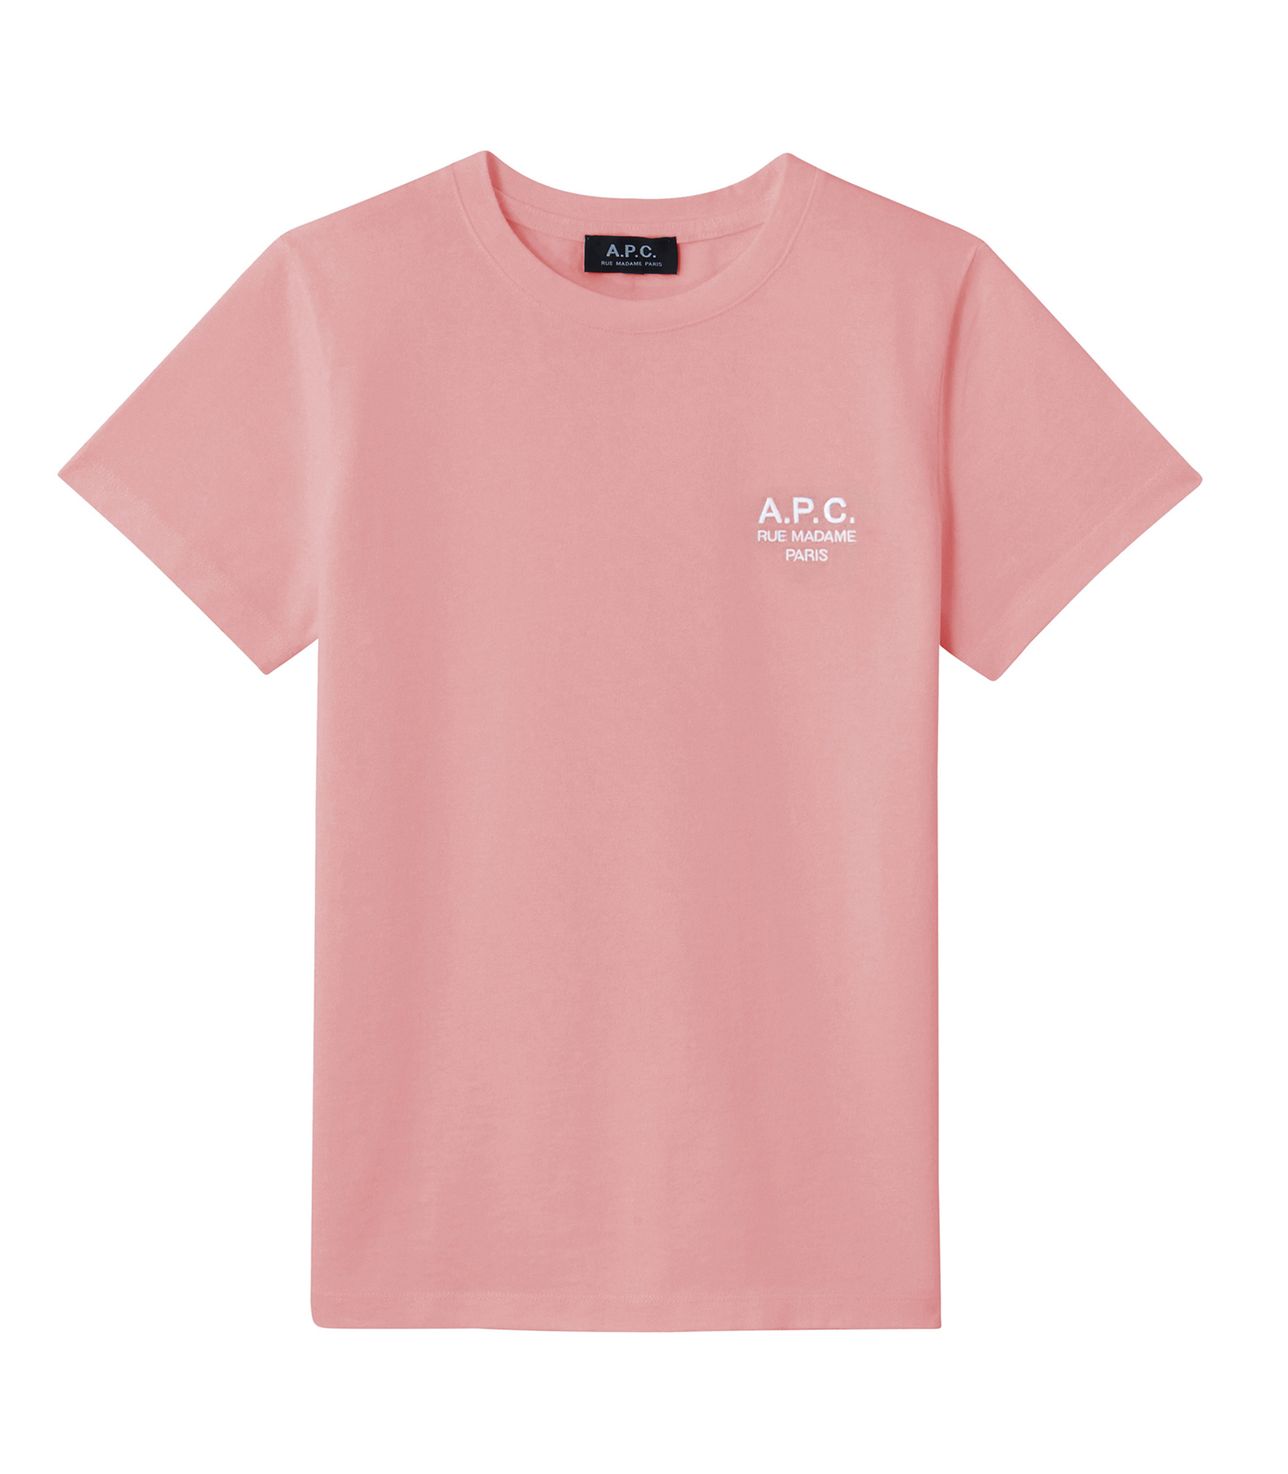 Denise T-shirt Faded rose APC